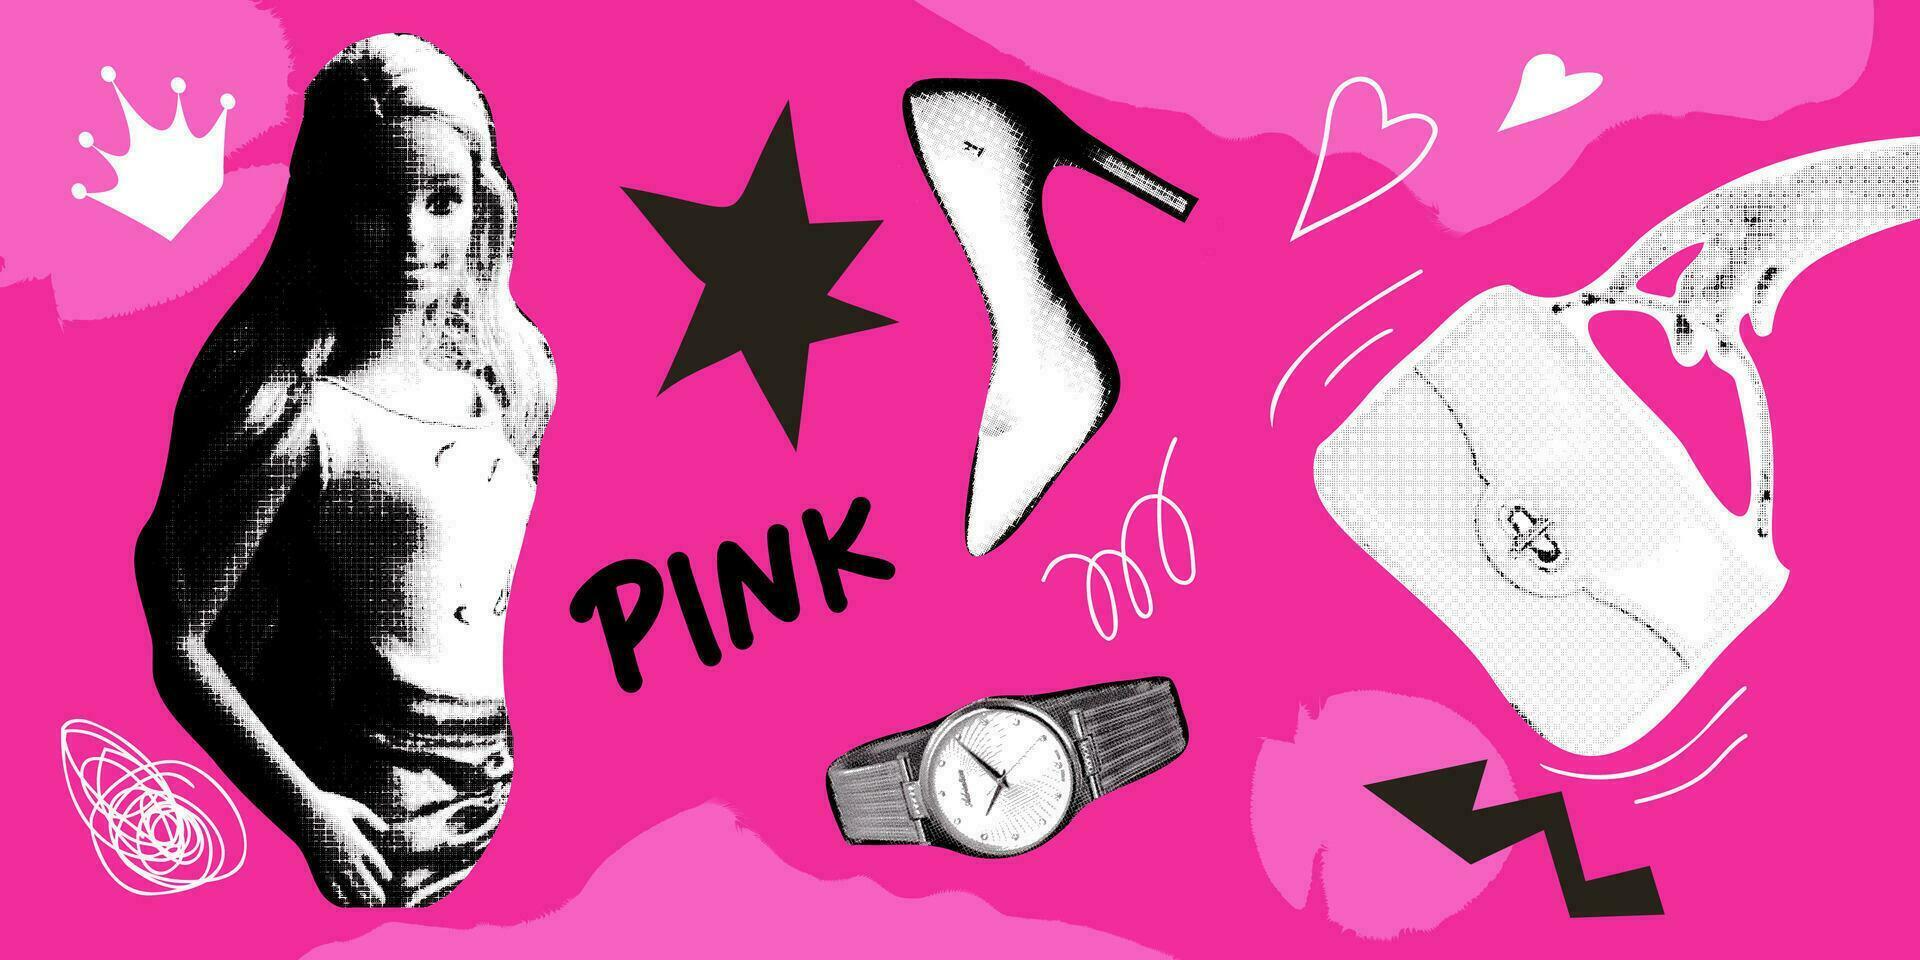 barbiecore colocar. collage elementos con muñeca, zapatos, mirar, bolso. atractivo de moda rosa accesorios colocar. Clásico vector colocar. nostálgico rosado 2000 estilo.